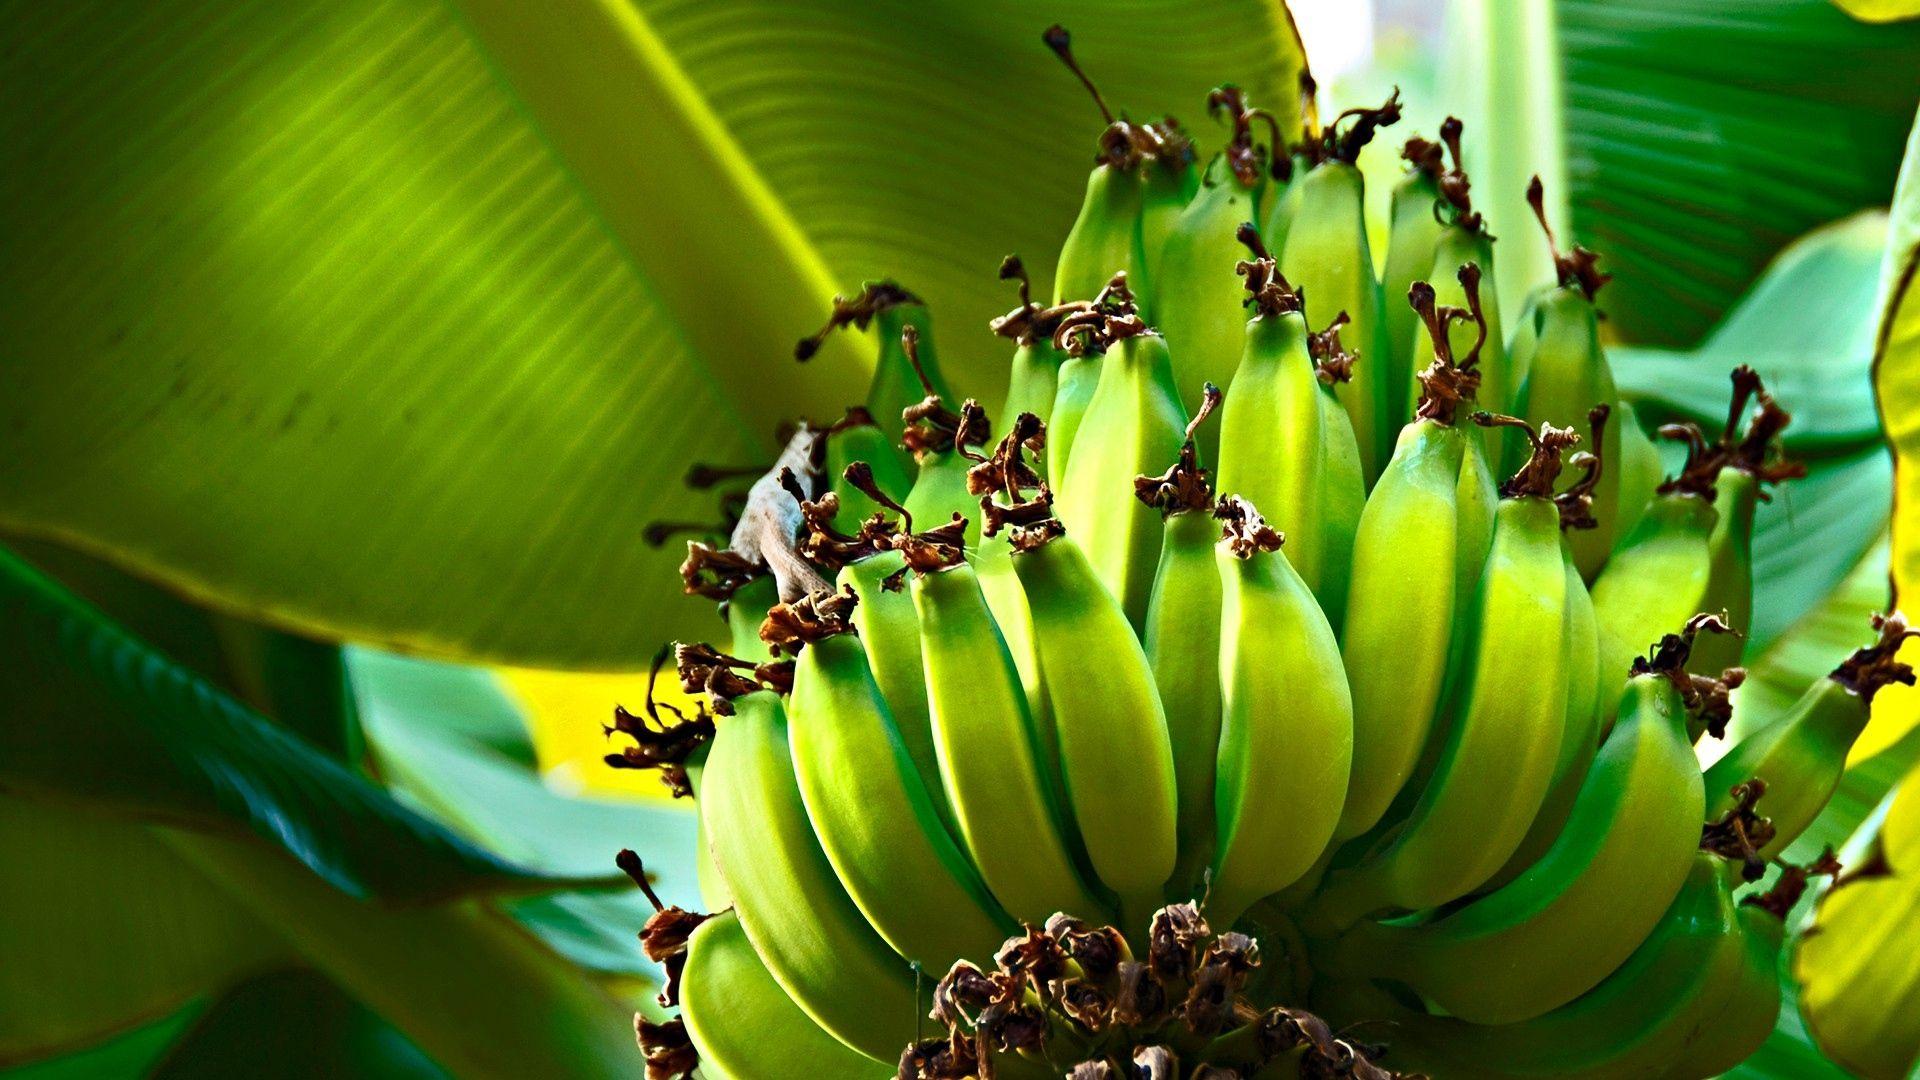 Download wallpaper 1920x1080 bananas, green, fruits, fruit, tree HD